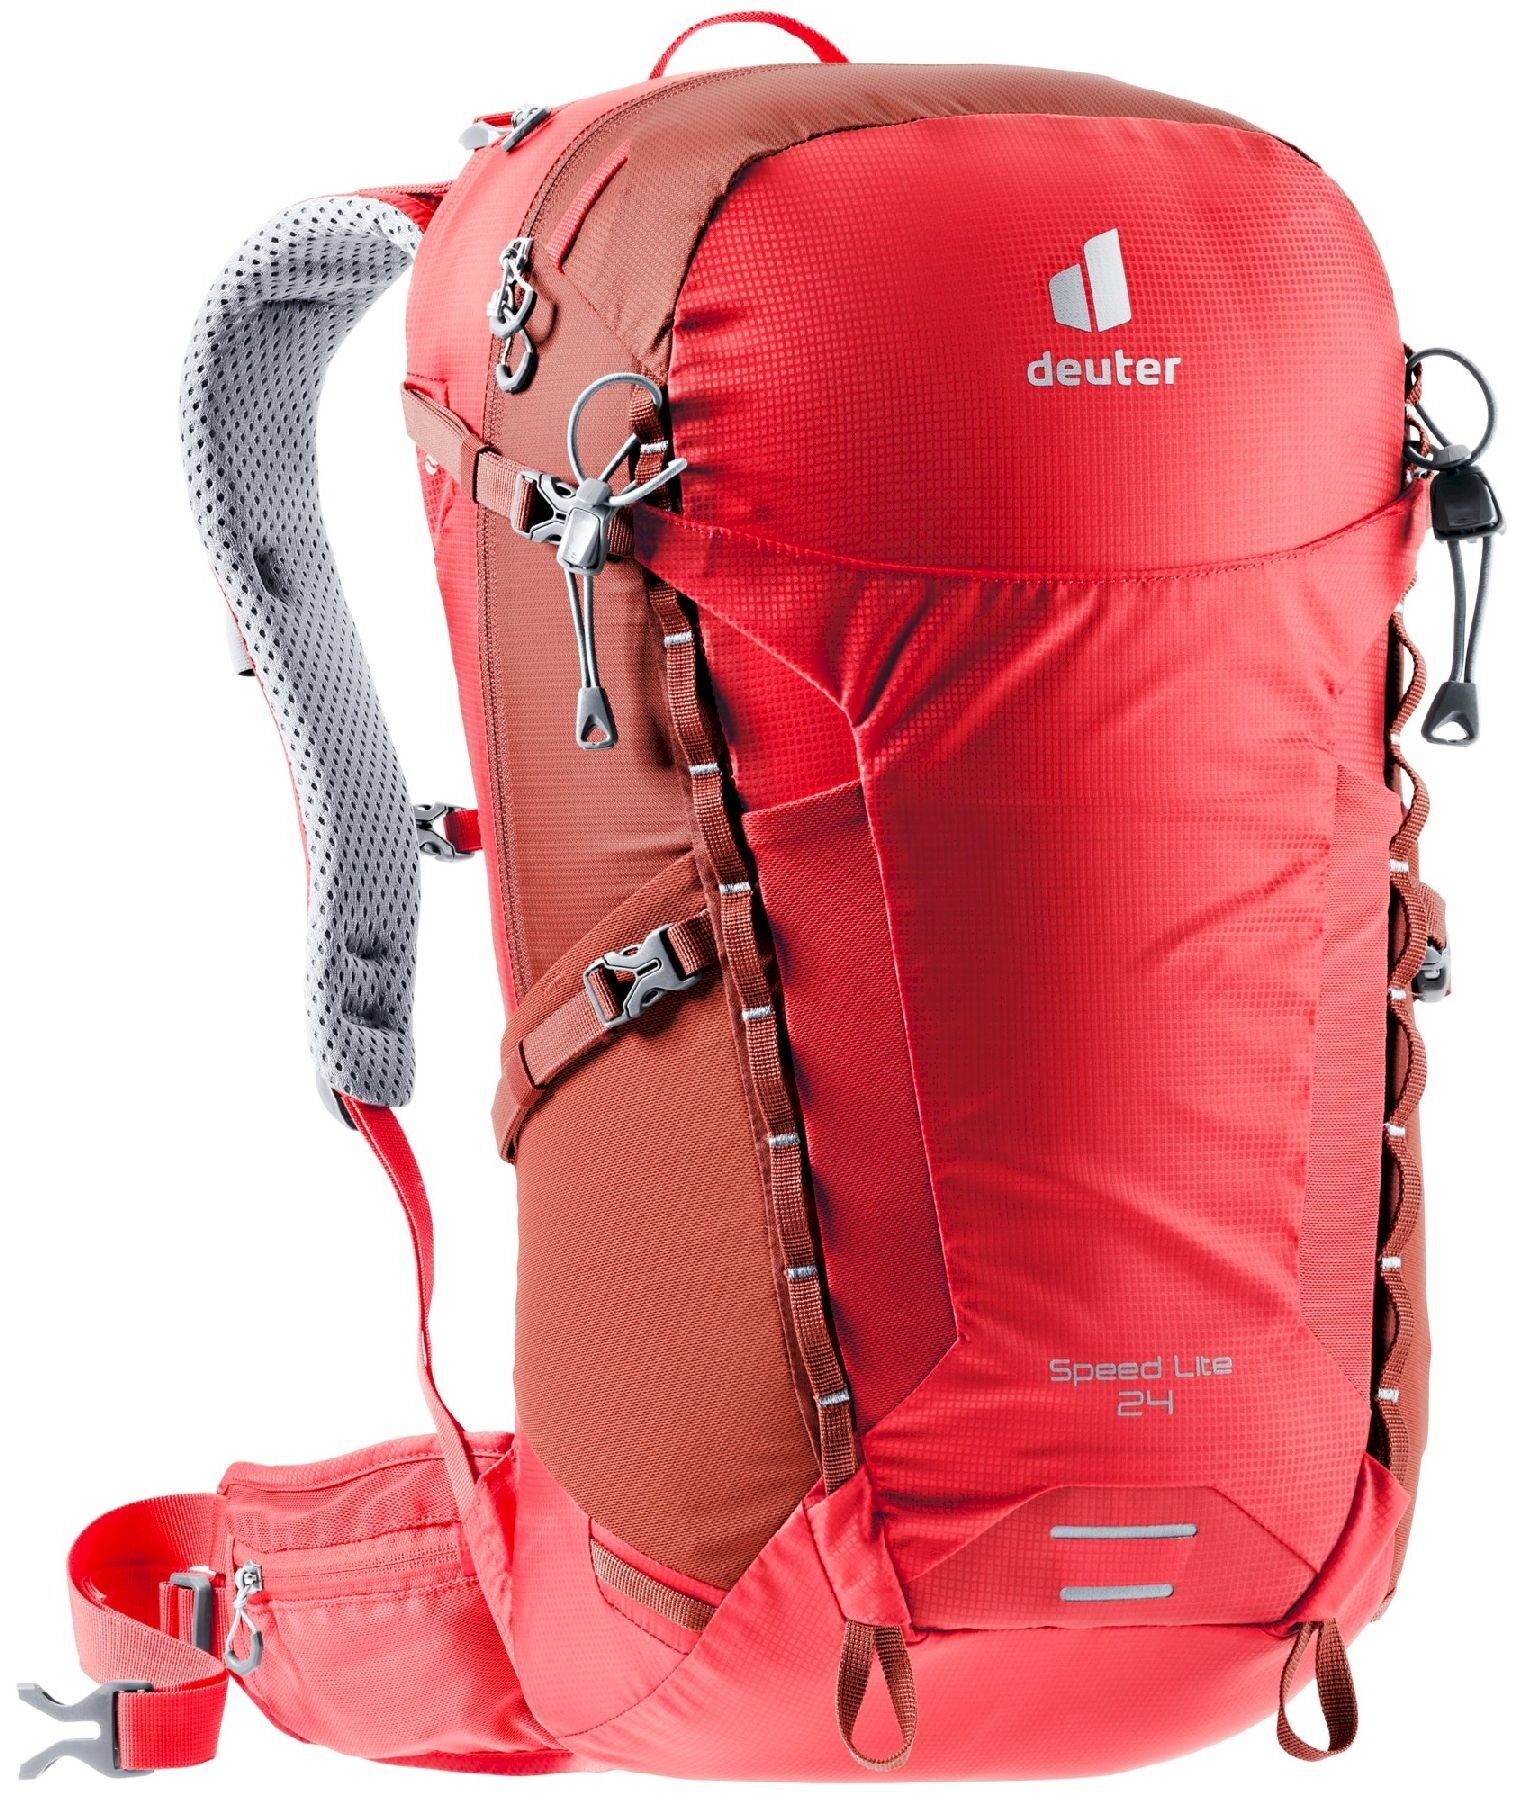 Deuter Speed Lite 24 - Walking backpack - Men's